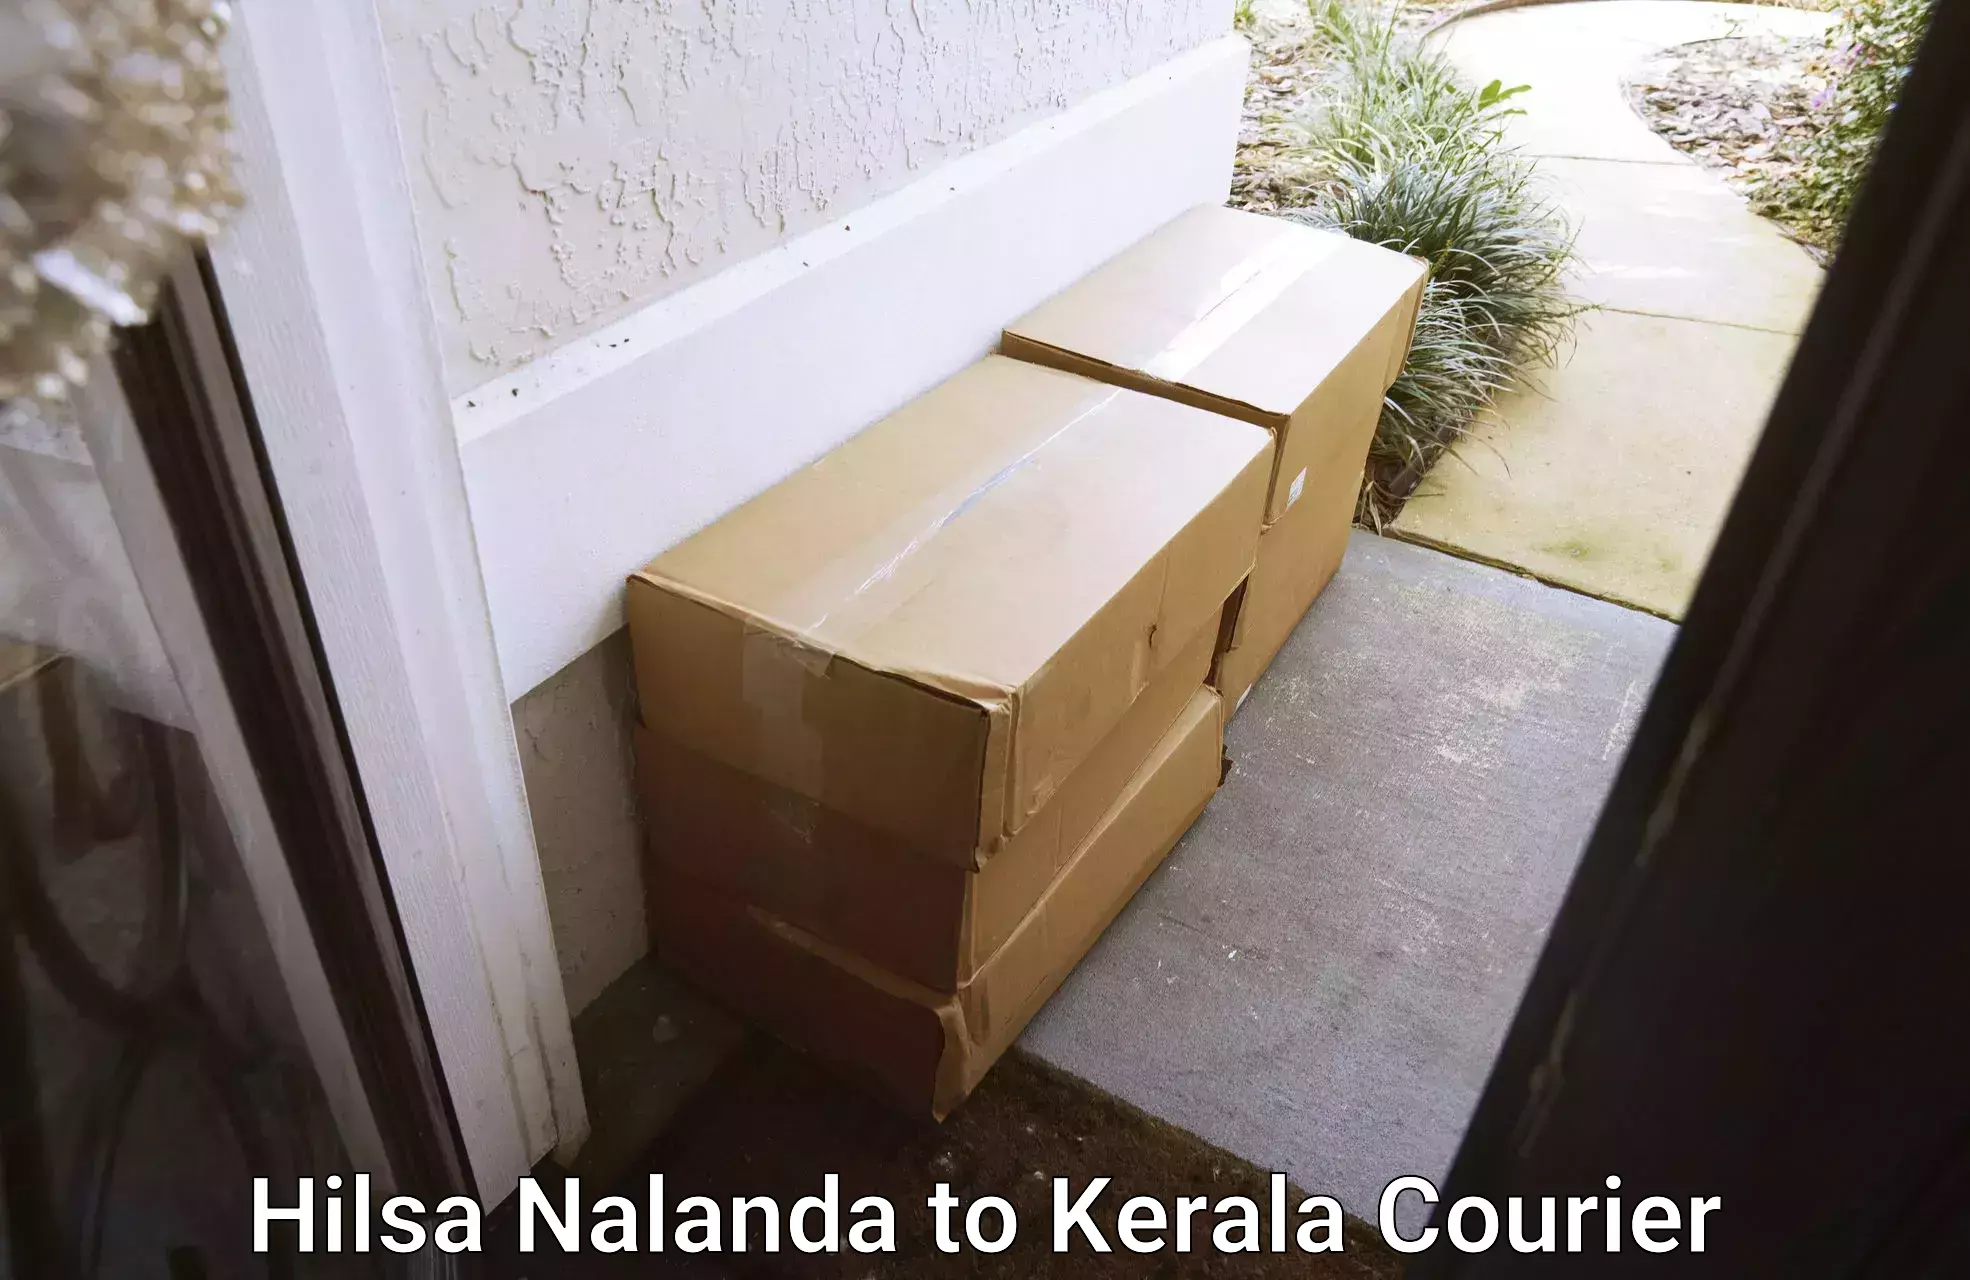 Quality moving company Hilsa Nalanda to Kerala